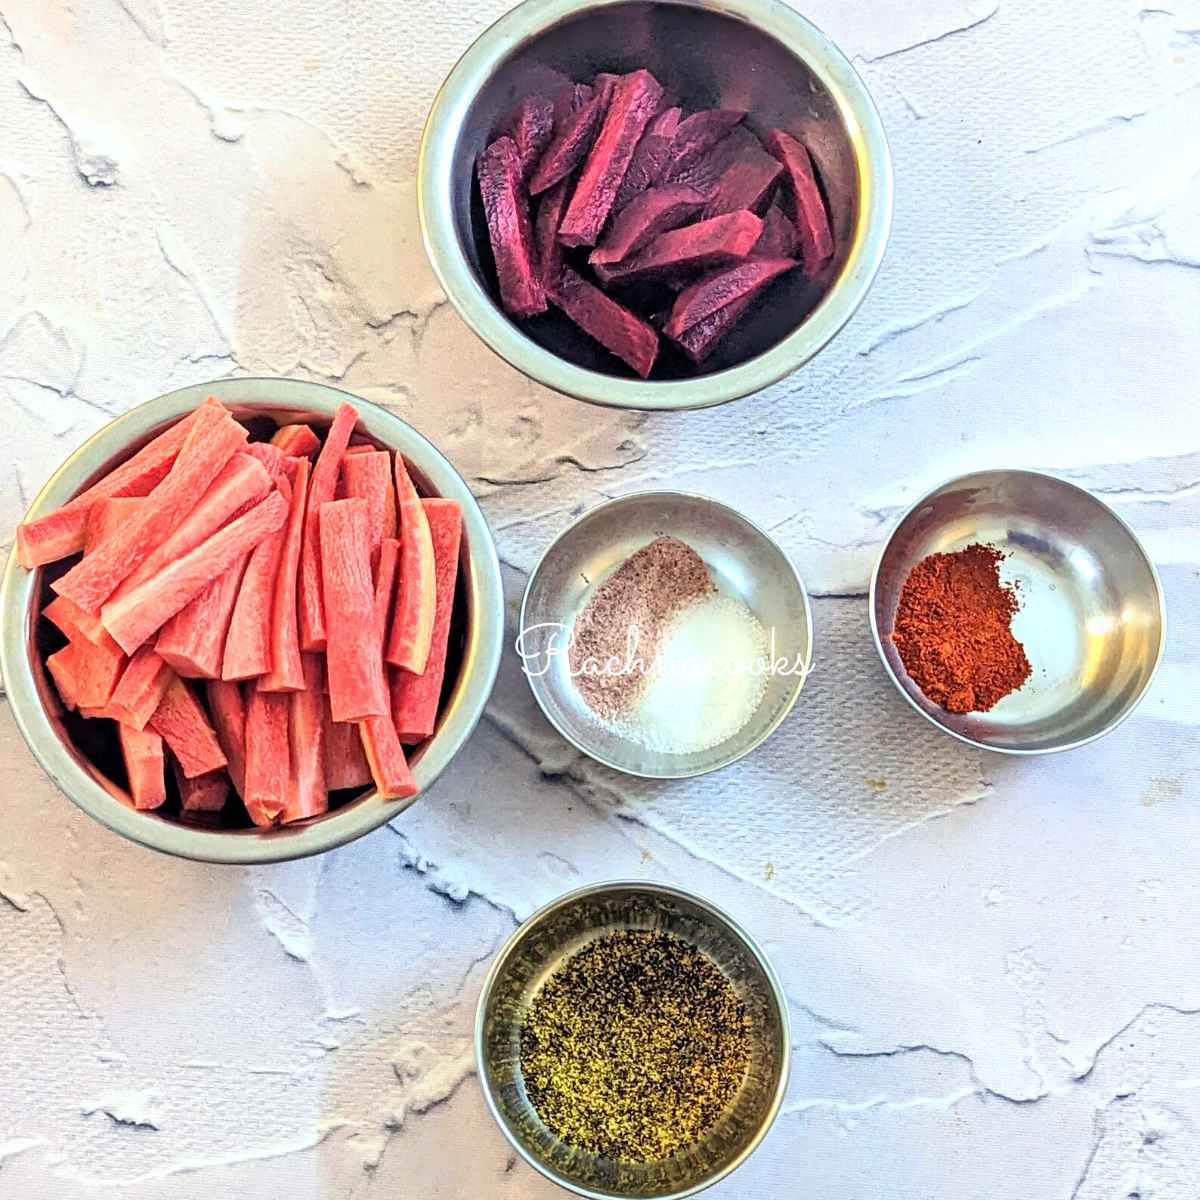 Ingredients for kanji: carrot batons, beet batons, cayenne, salt, pink salt and mustard powder.